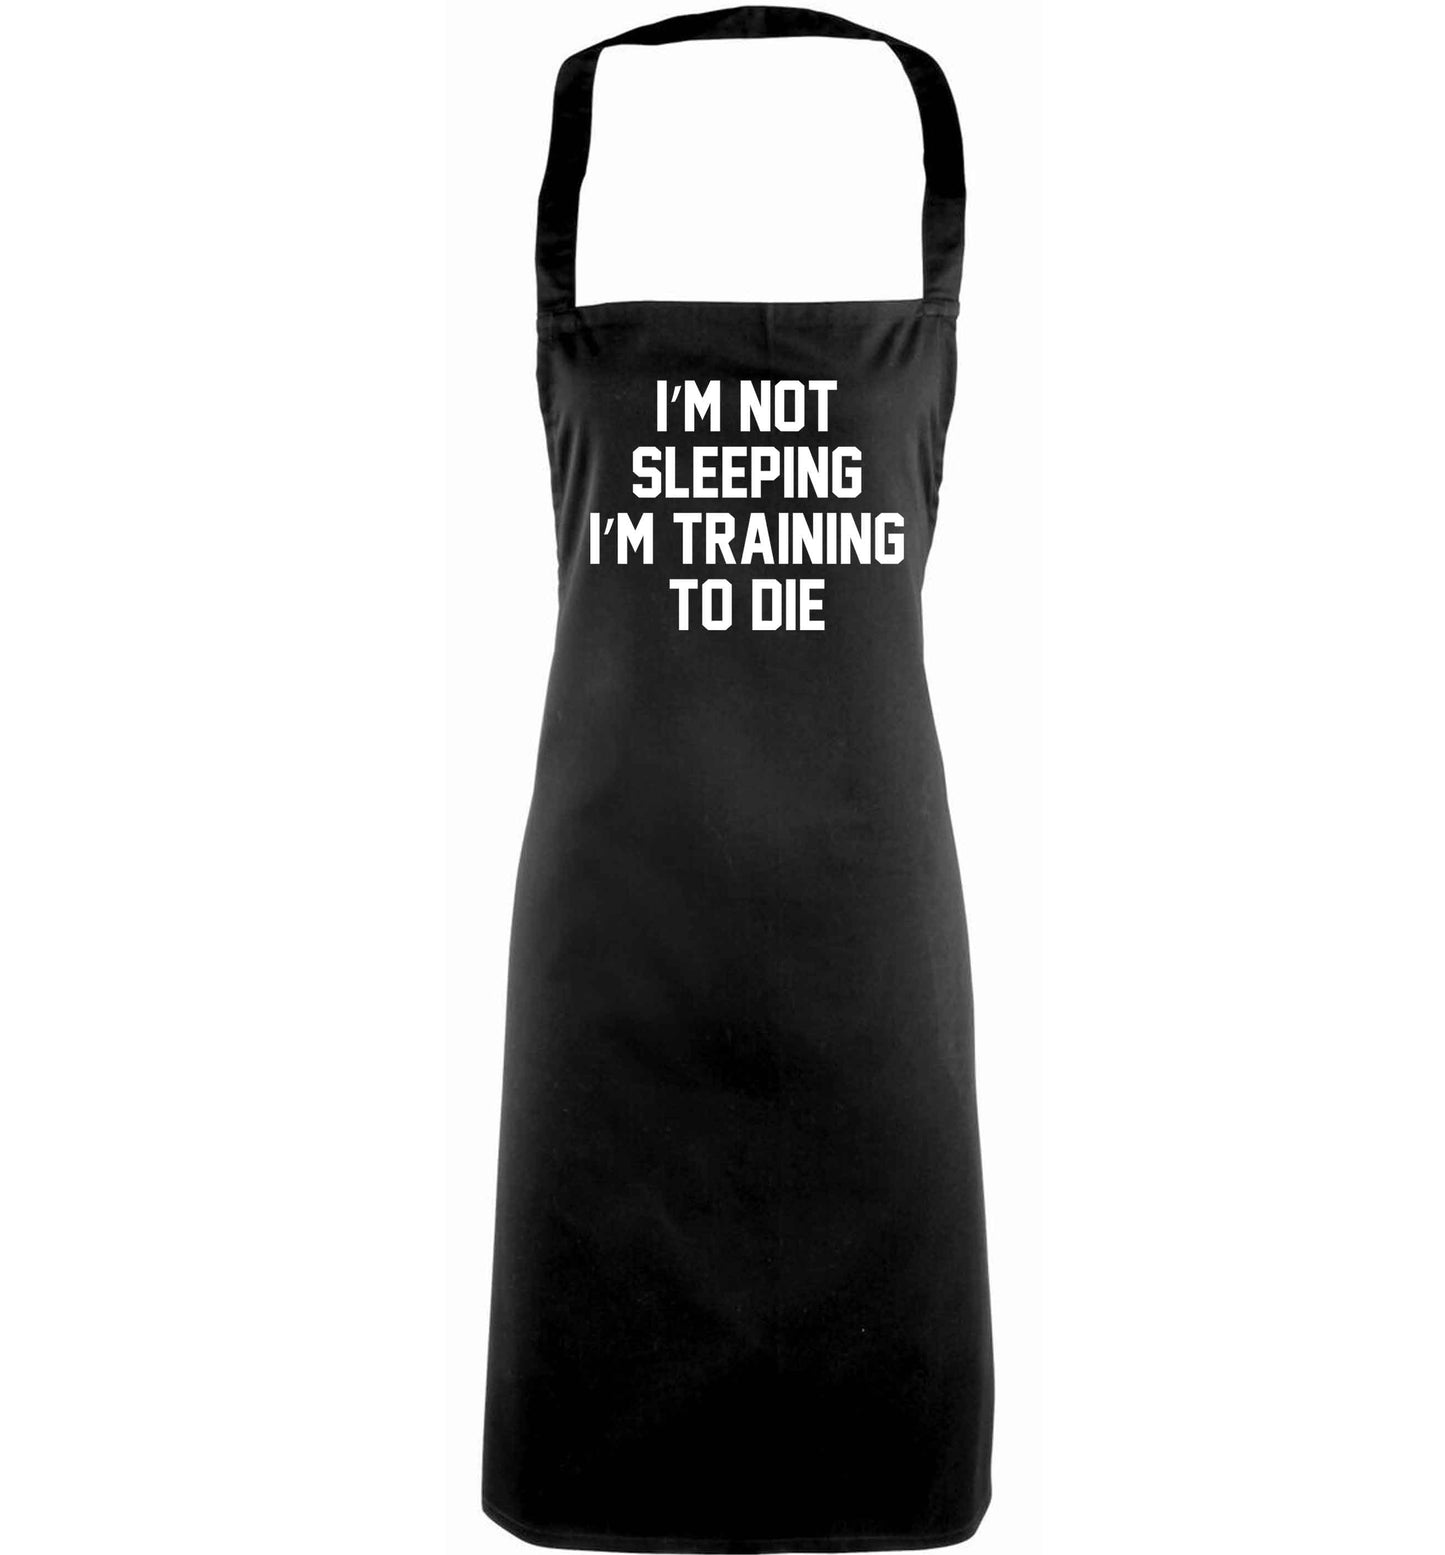 I'm not sleeping I'm training to die adults black apron